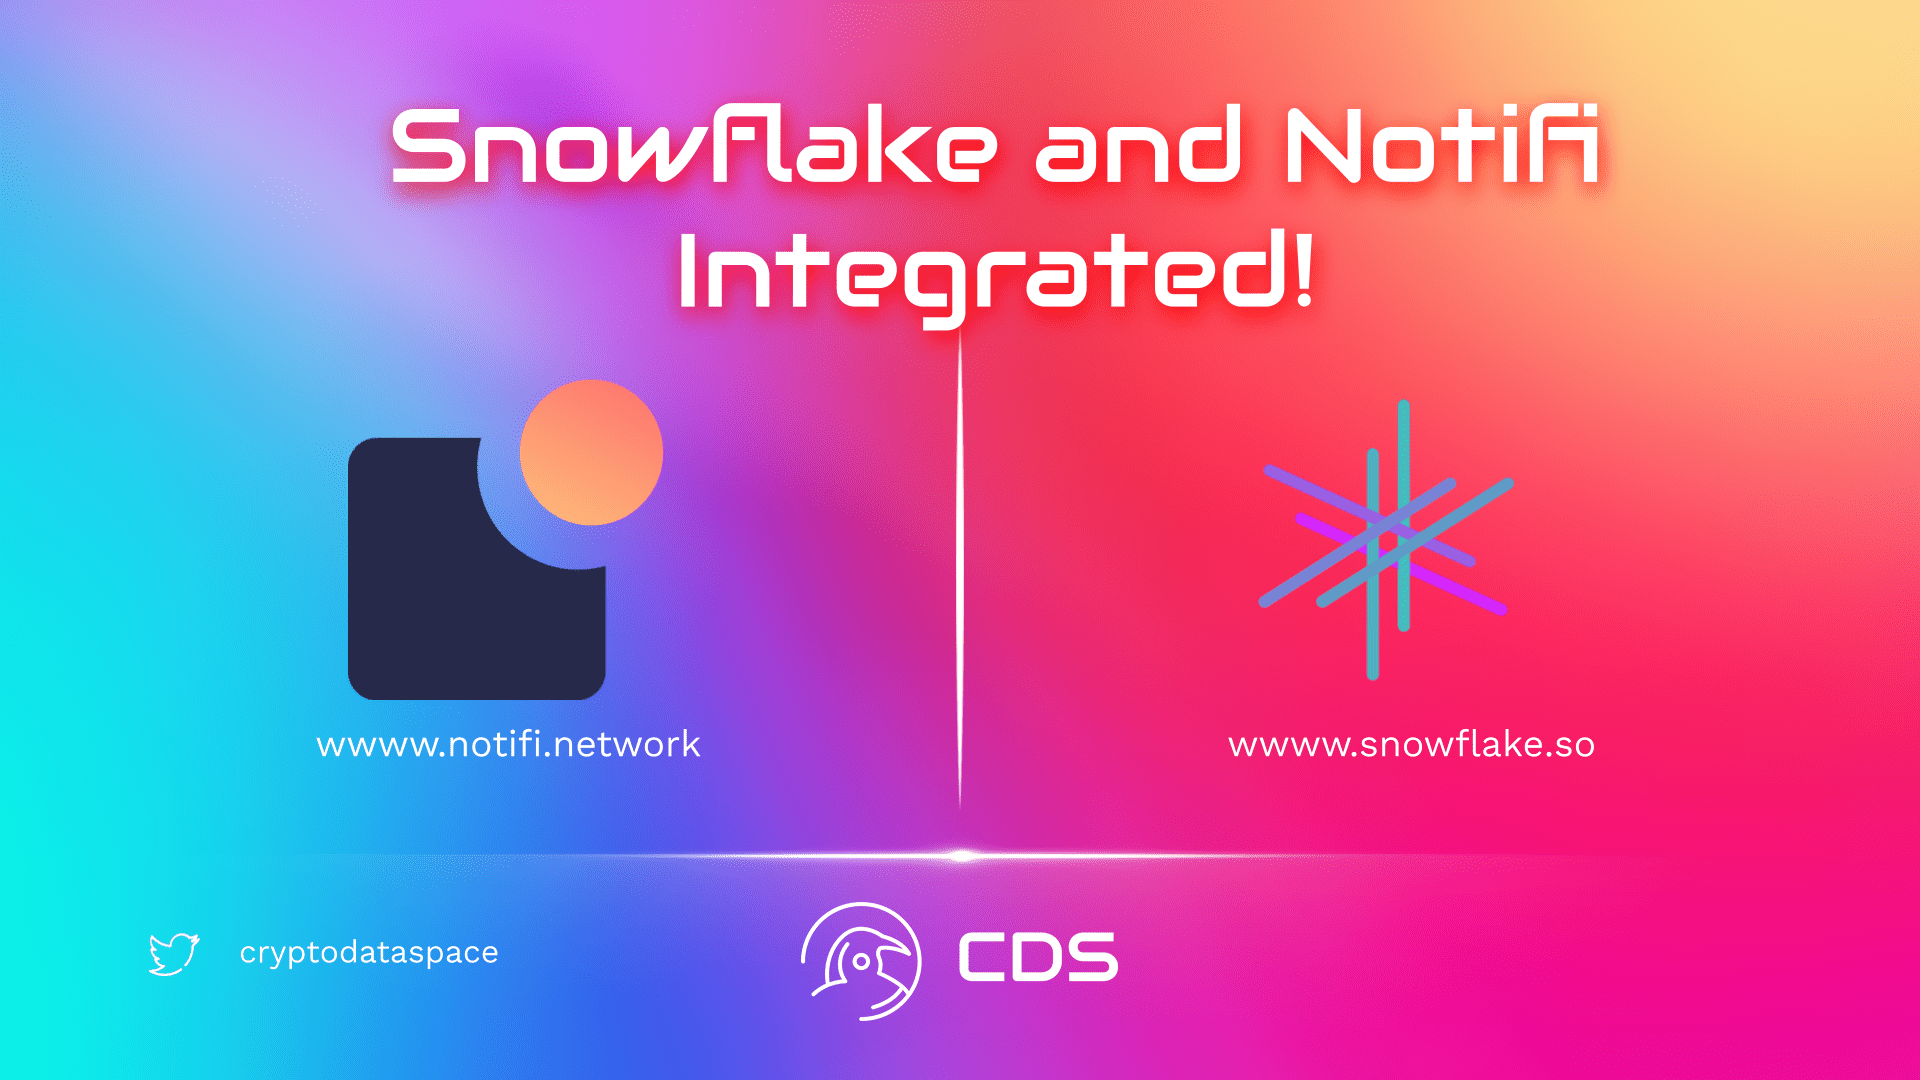 Snowflake and Notifi Integrated!